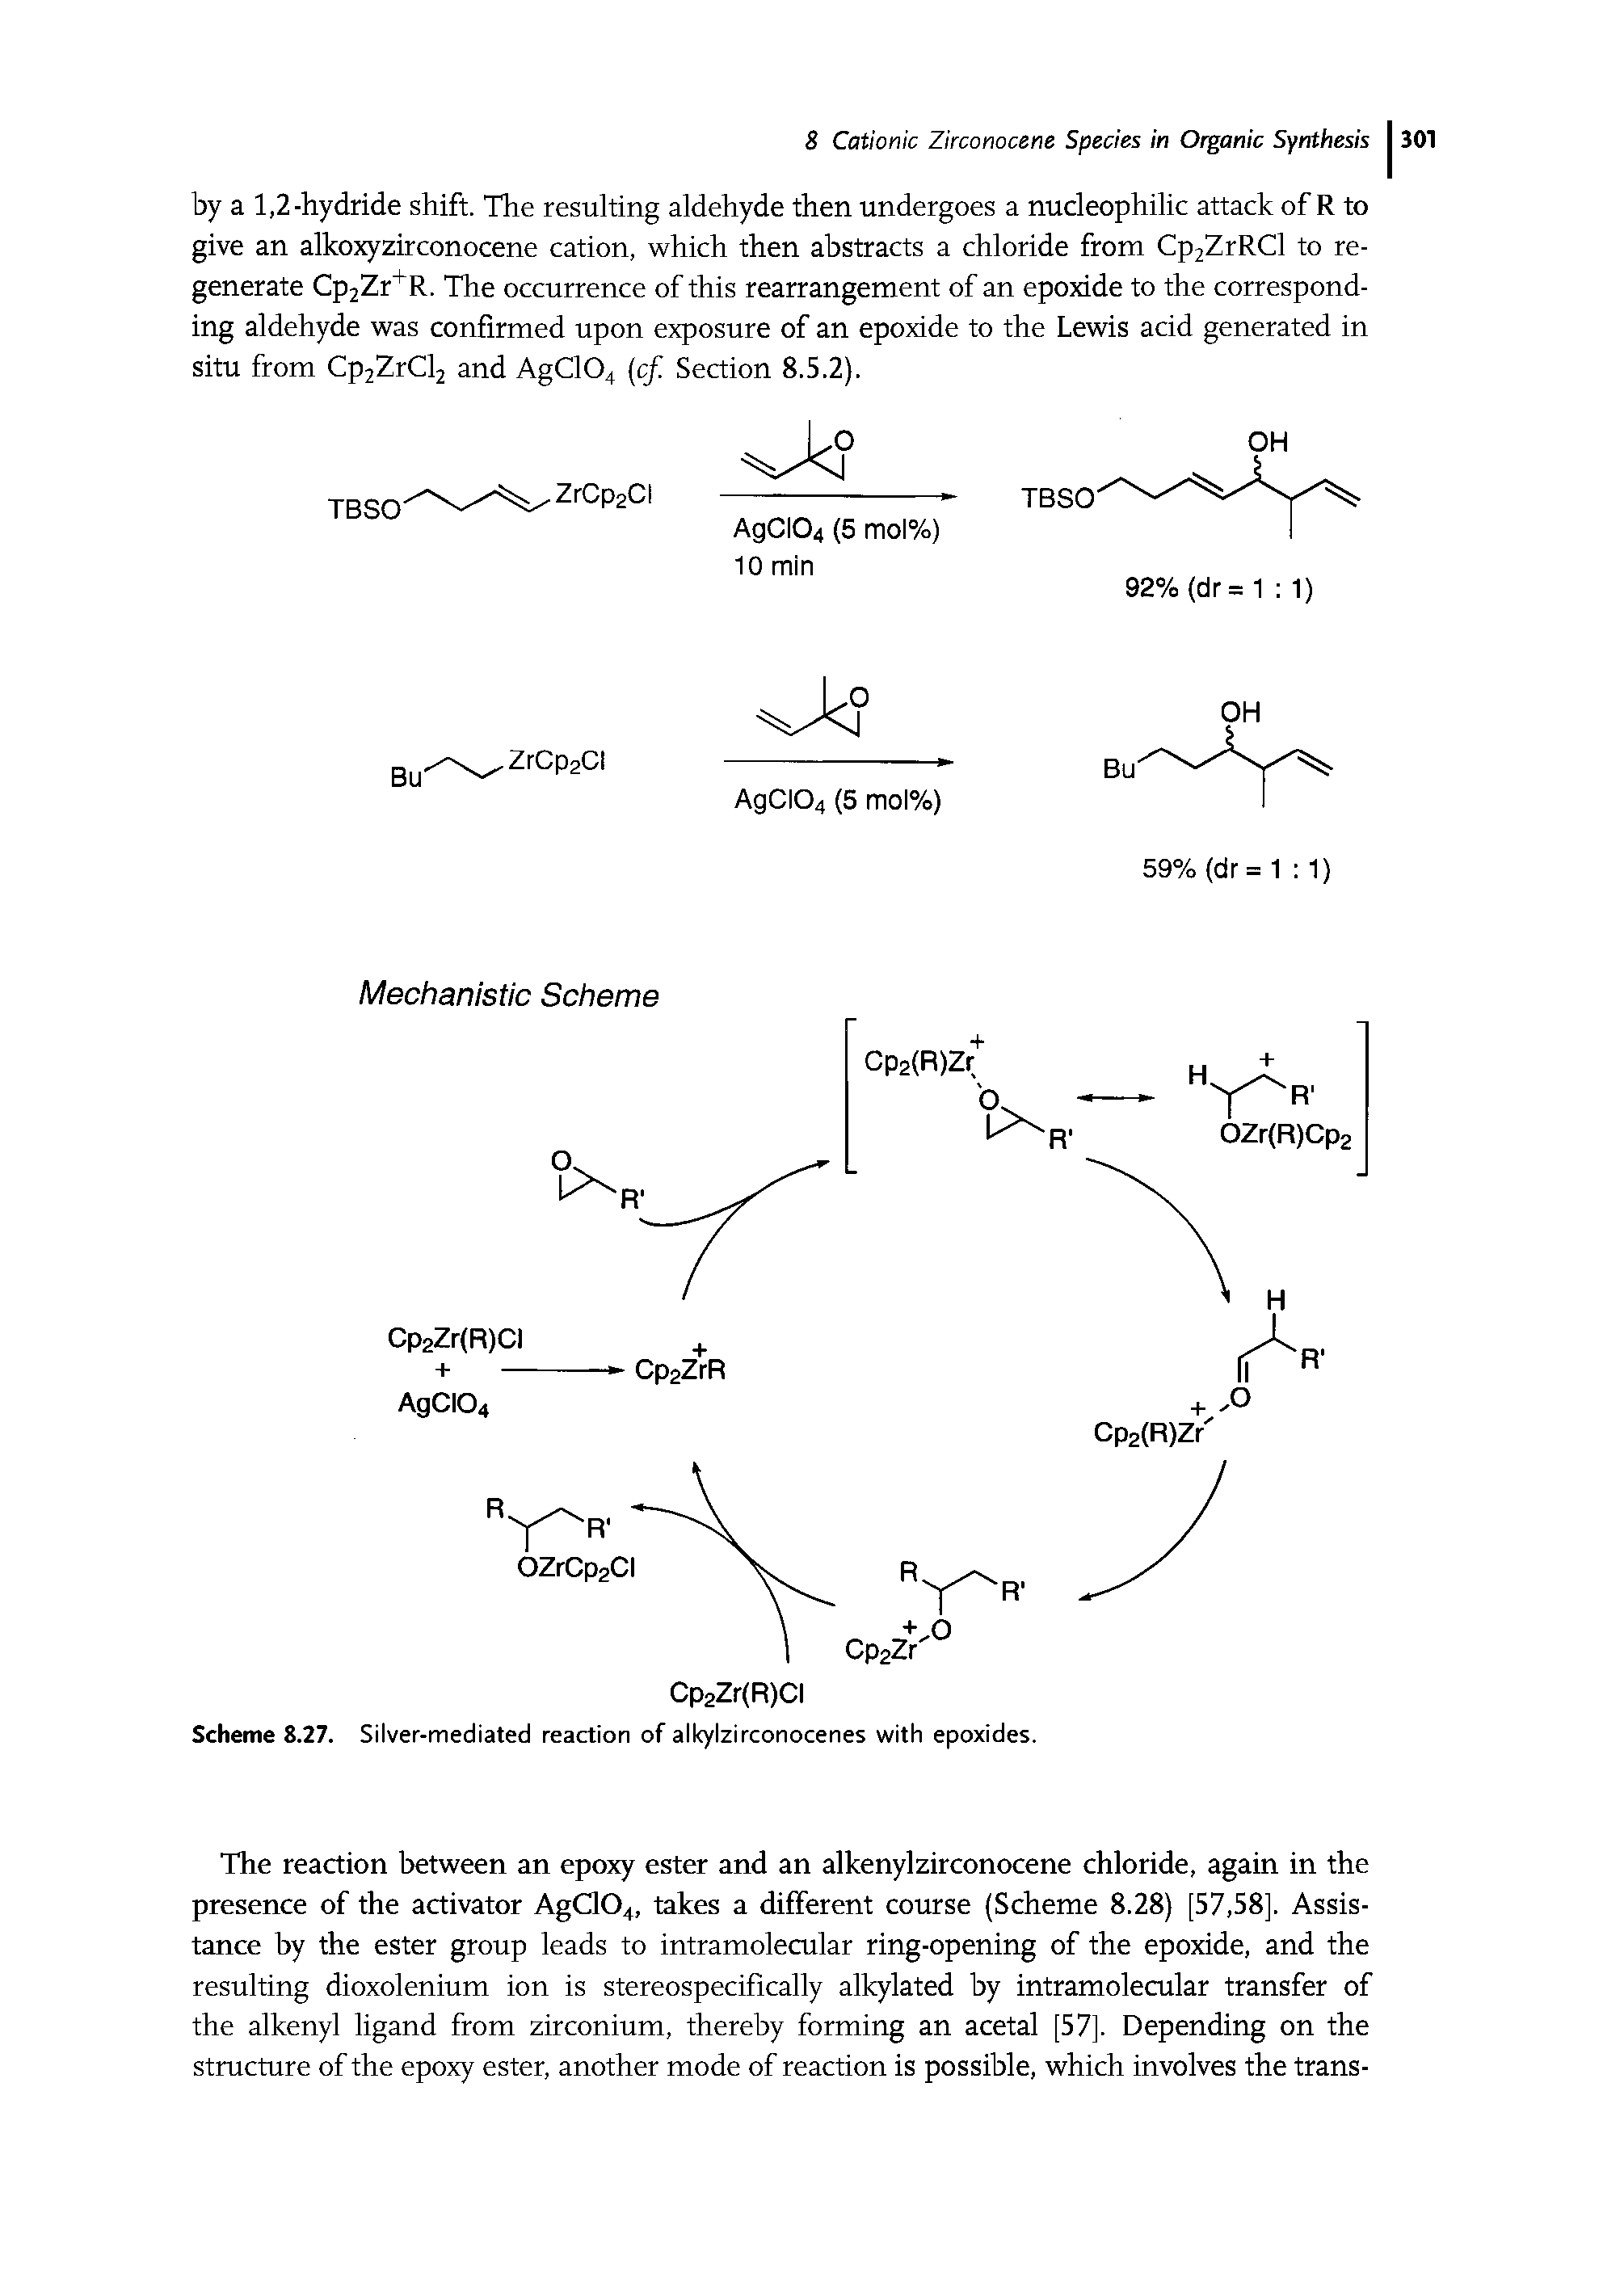 Scheme 8.27. Silver-mediated reaction of alkylzirconocenes with epoxides.